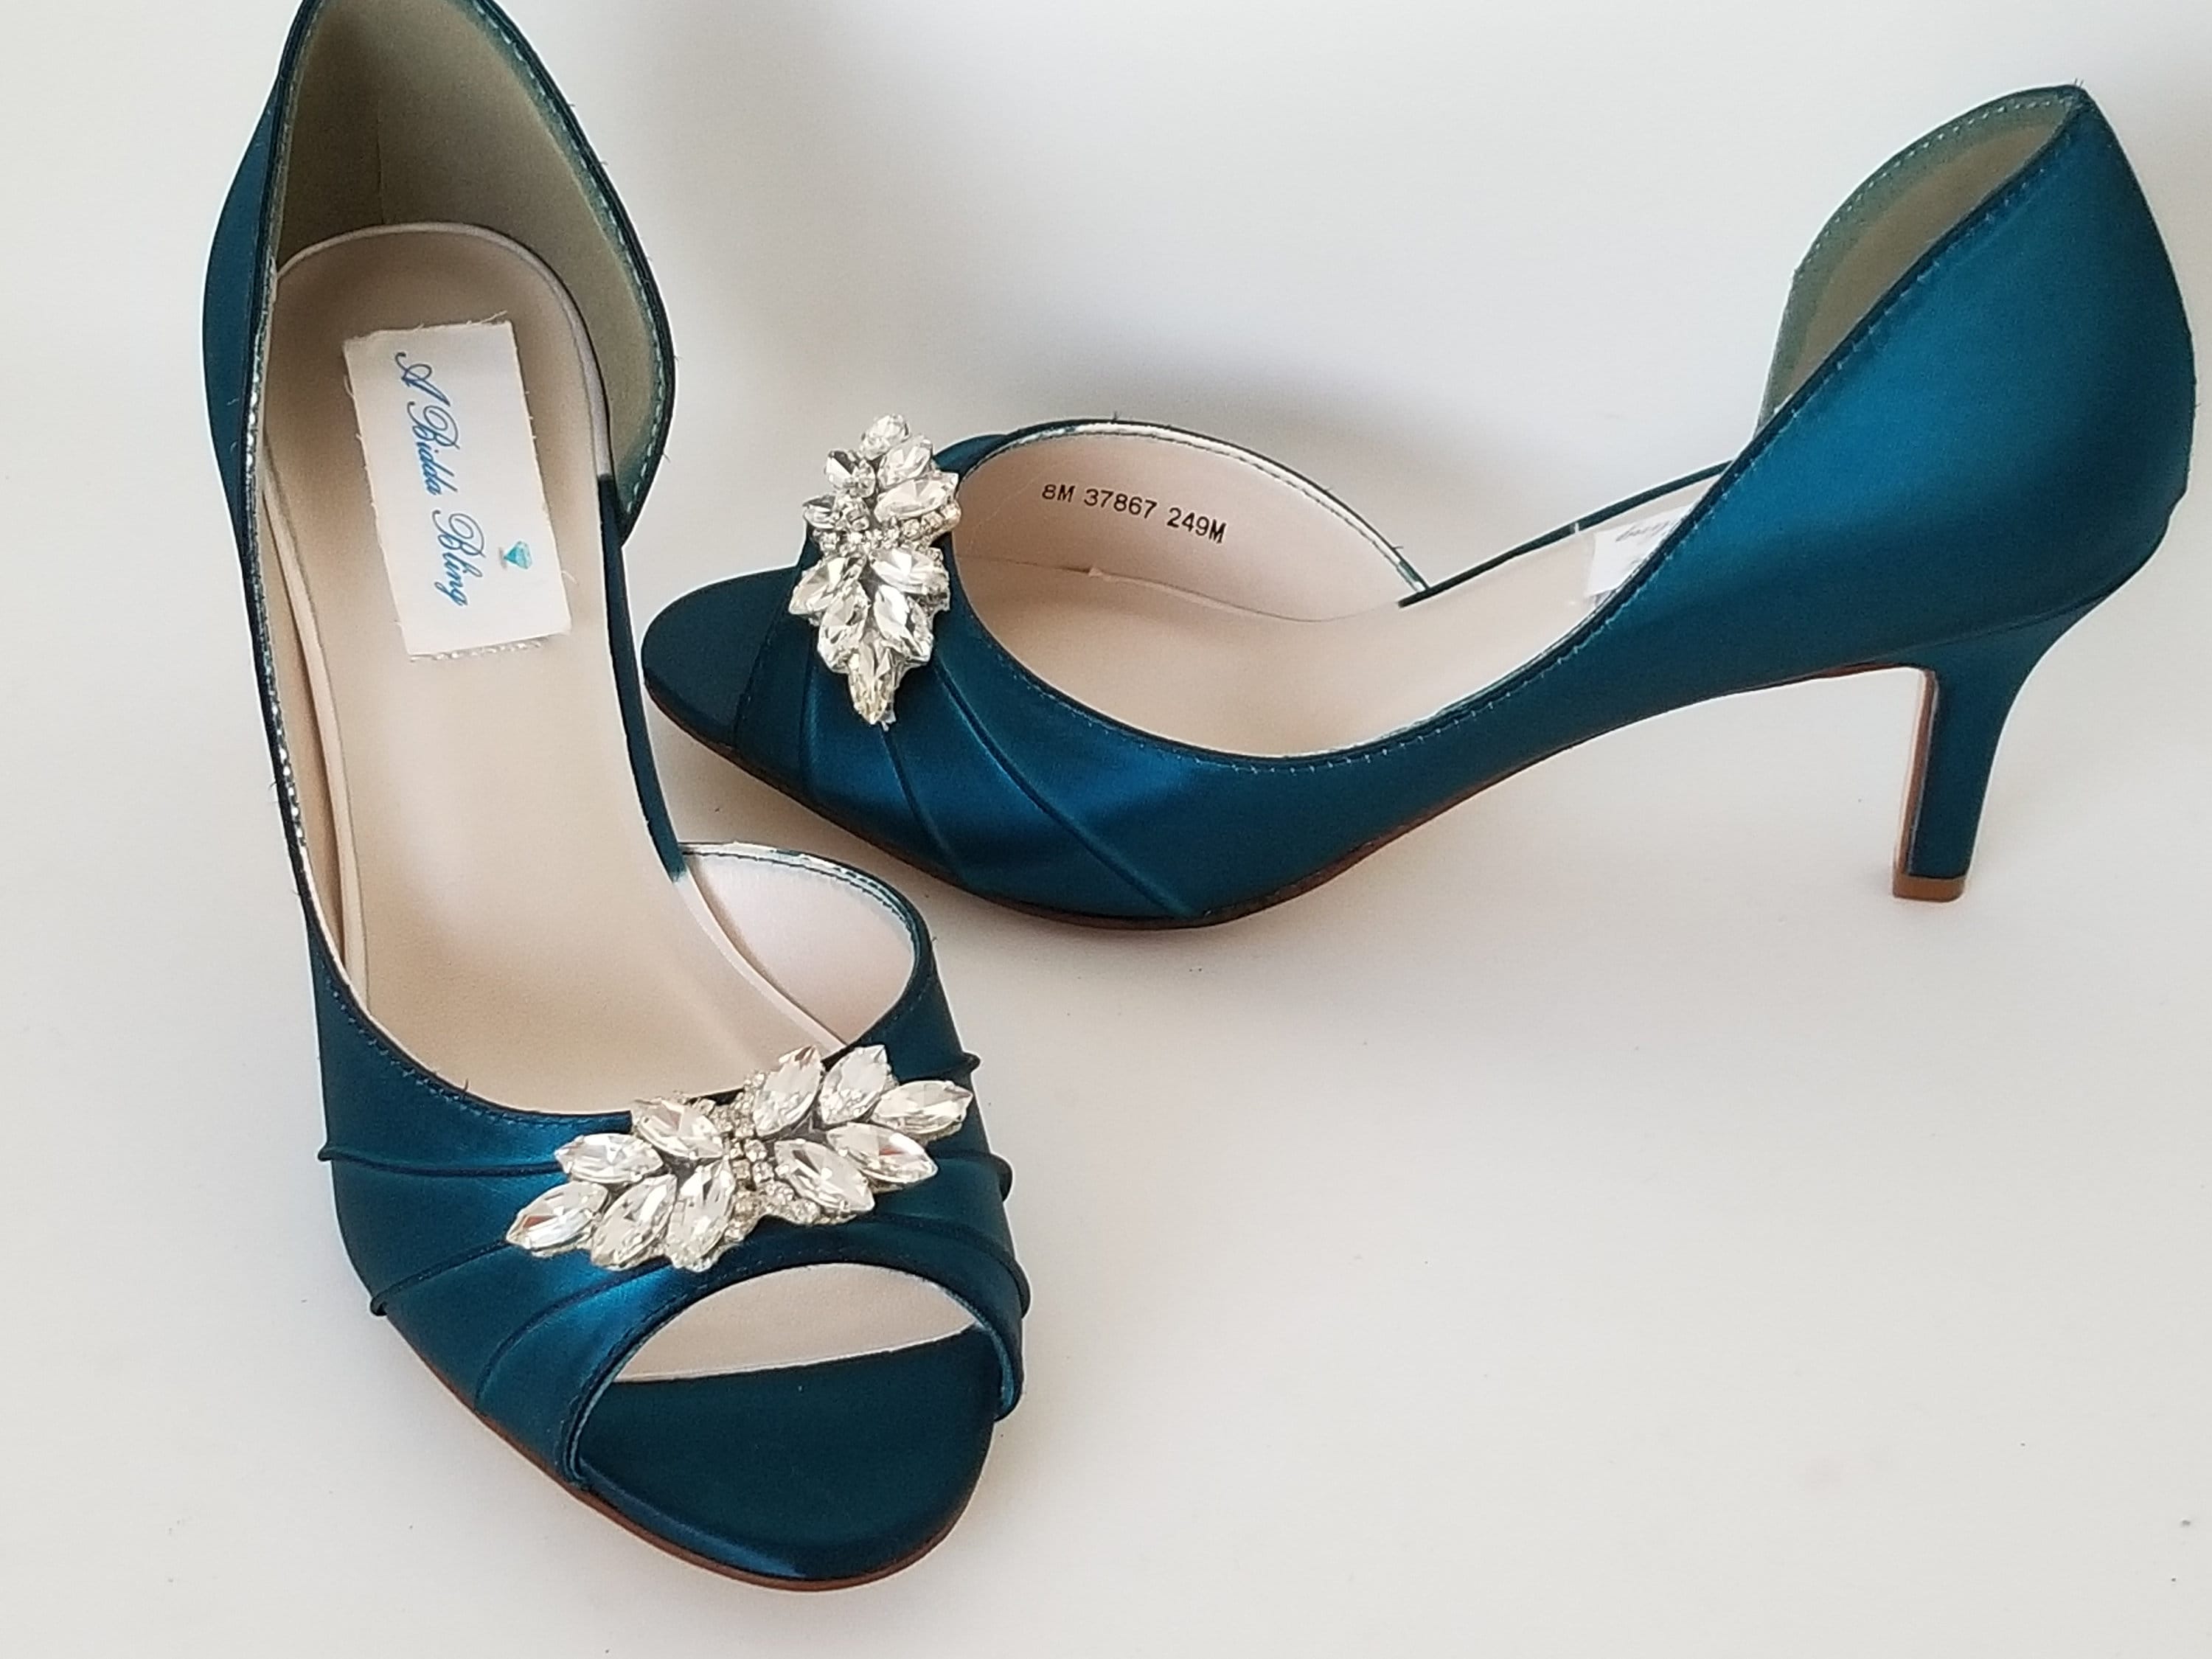 adviicd Slip Resistant Shoes For Women High Heels For Girls Womenâ€™s Ankle  Strap Dress Pump Low Heel Sandals Gold 7 - Walmart.com